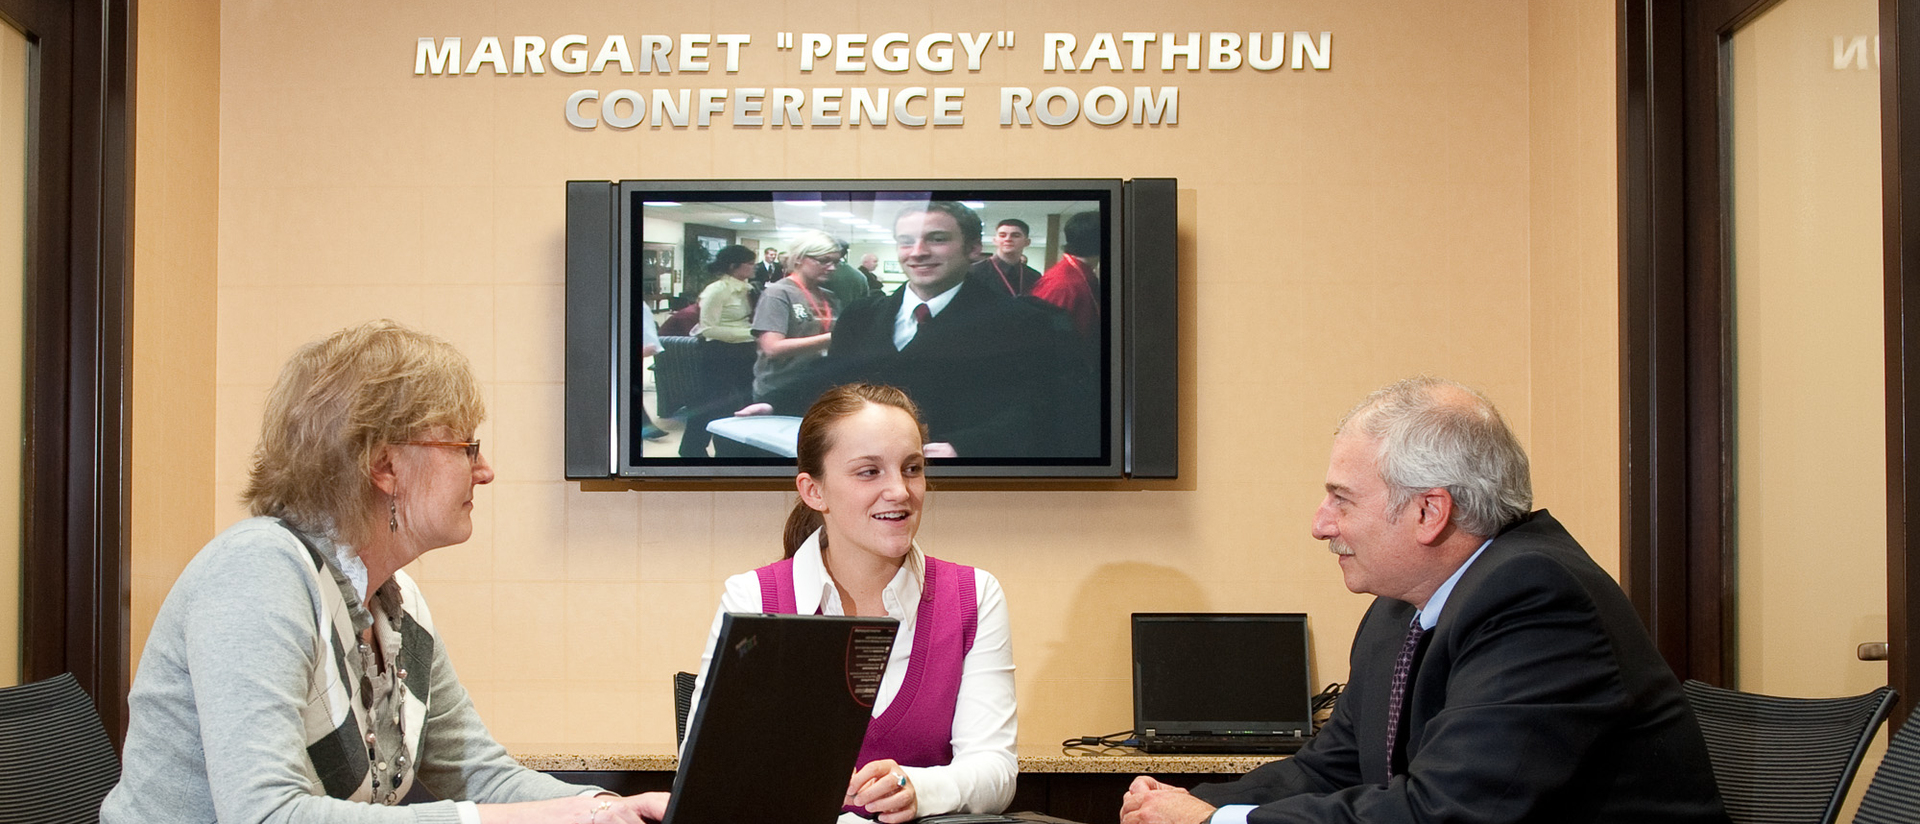 Margaret Peggy Rathbun Conference Room